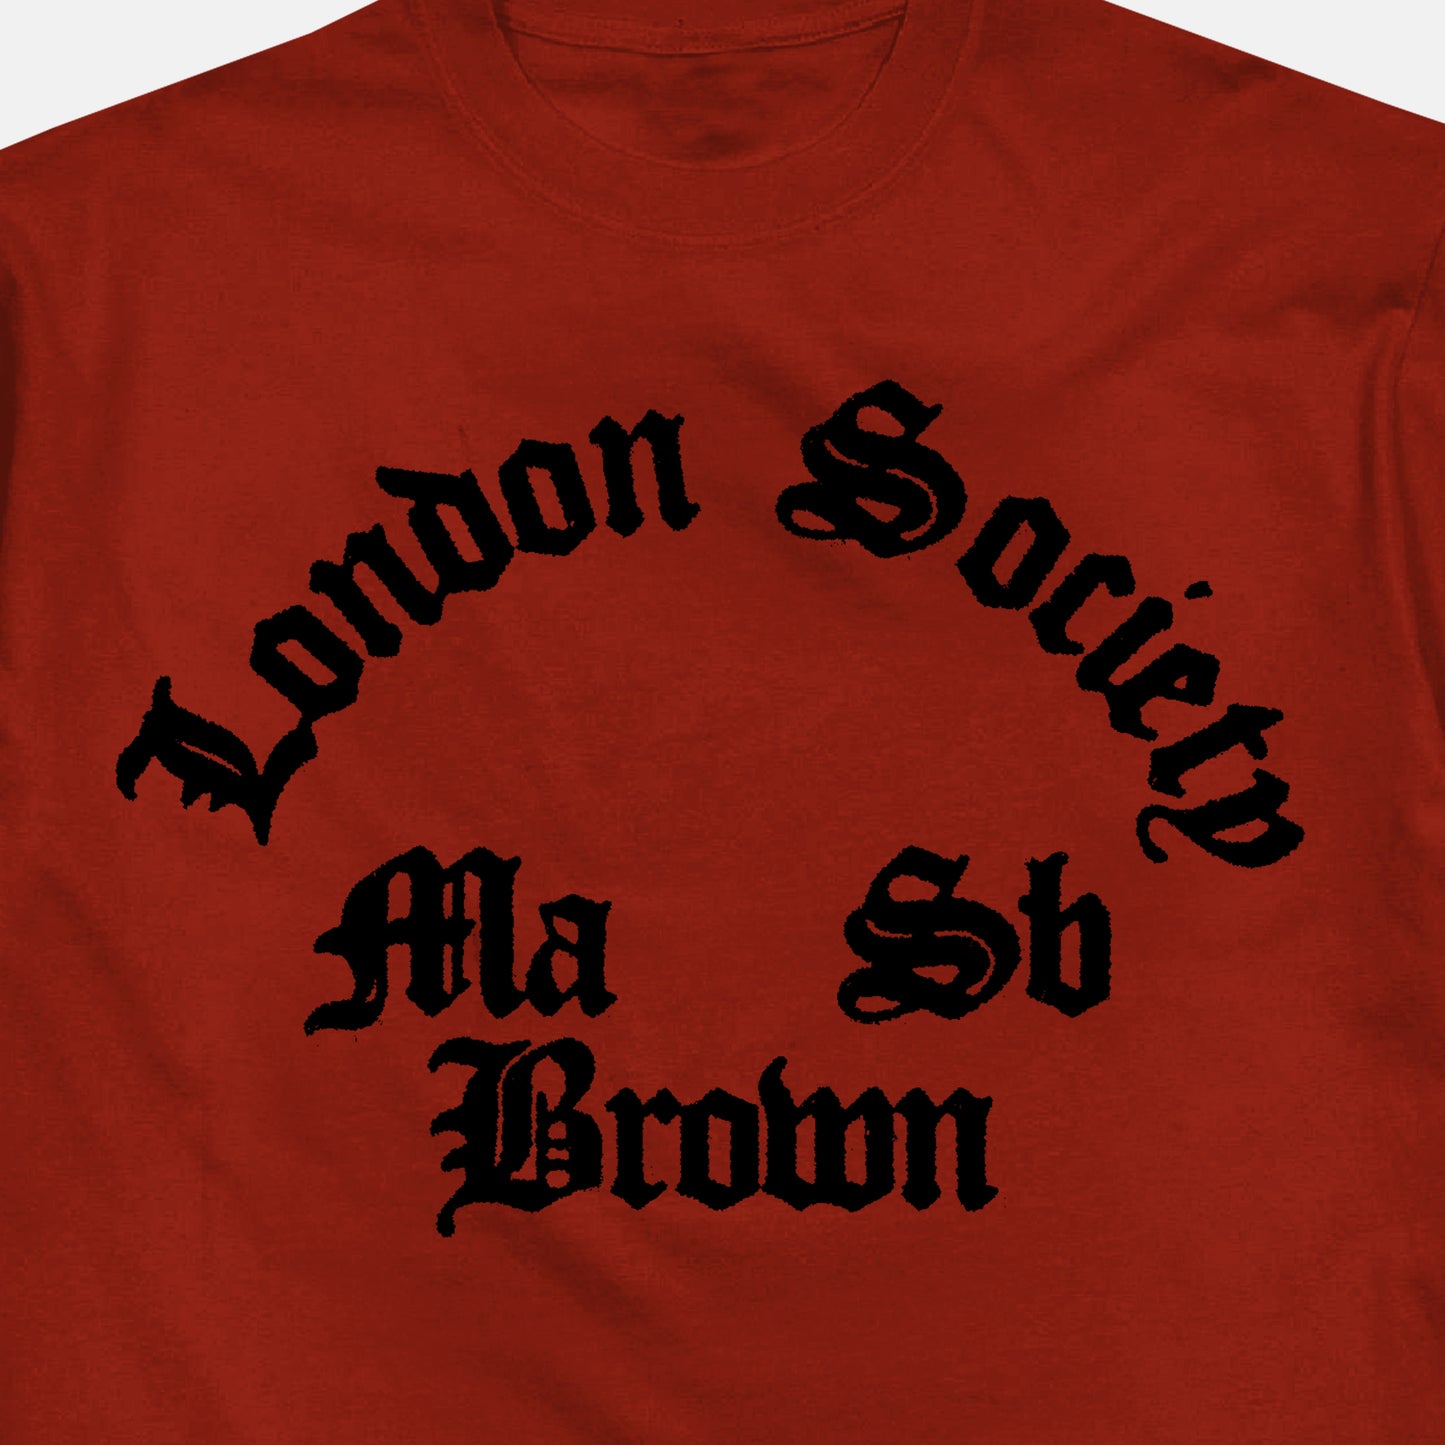 ‘London Society’ T-Shirt by Simon Brown